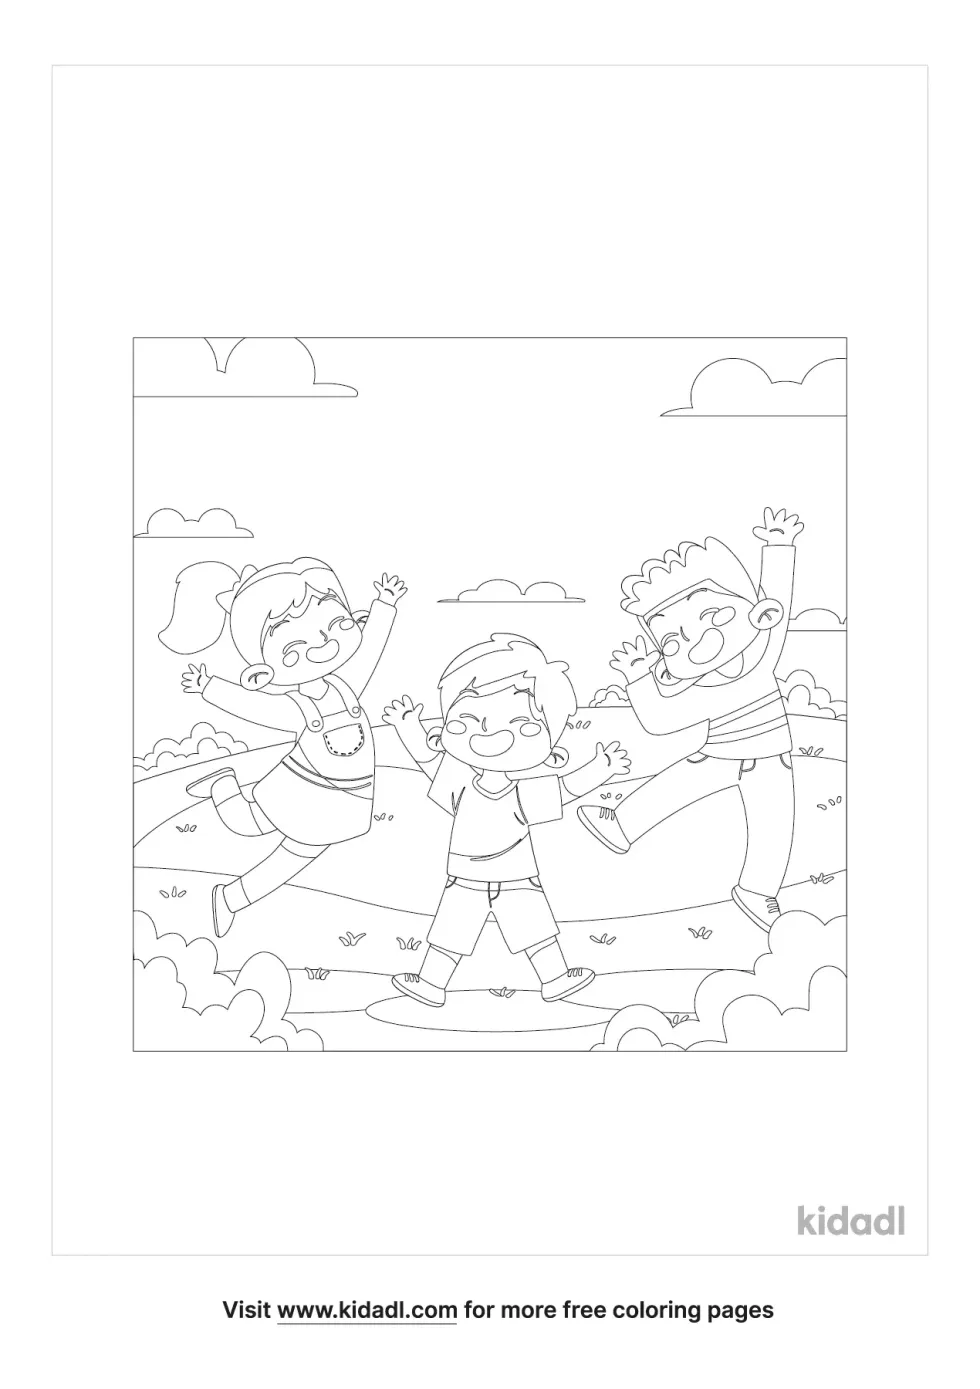 Happy Child Cartoon Coloring Page